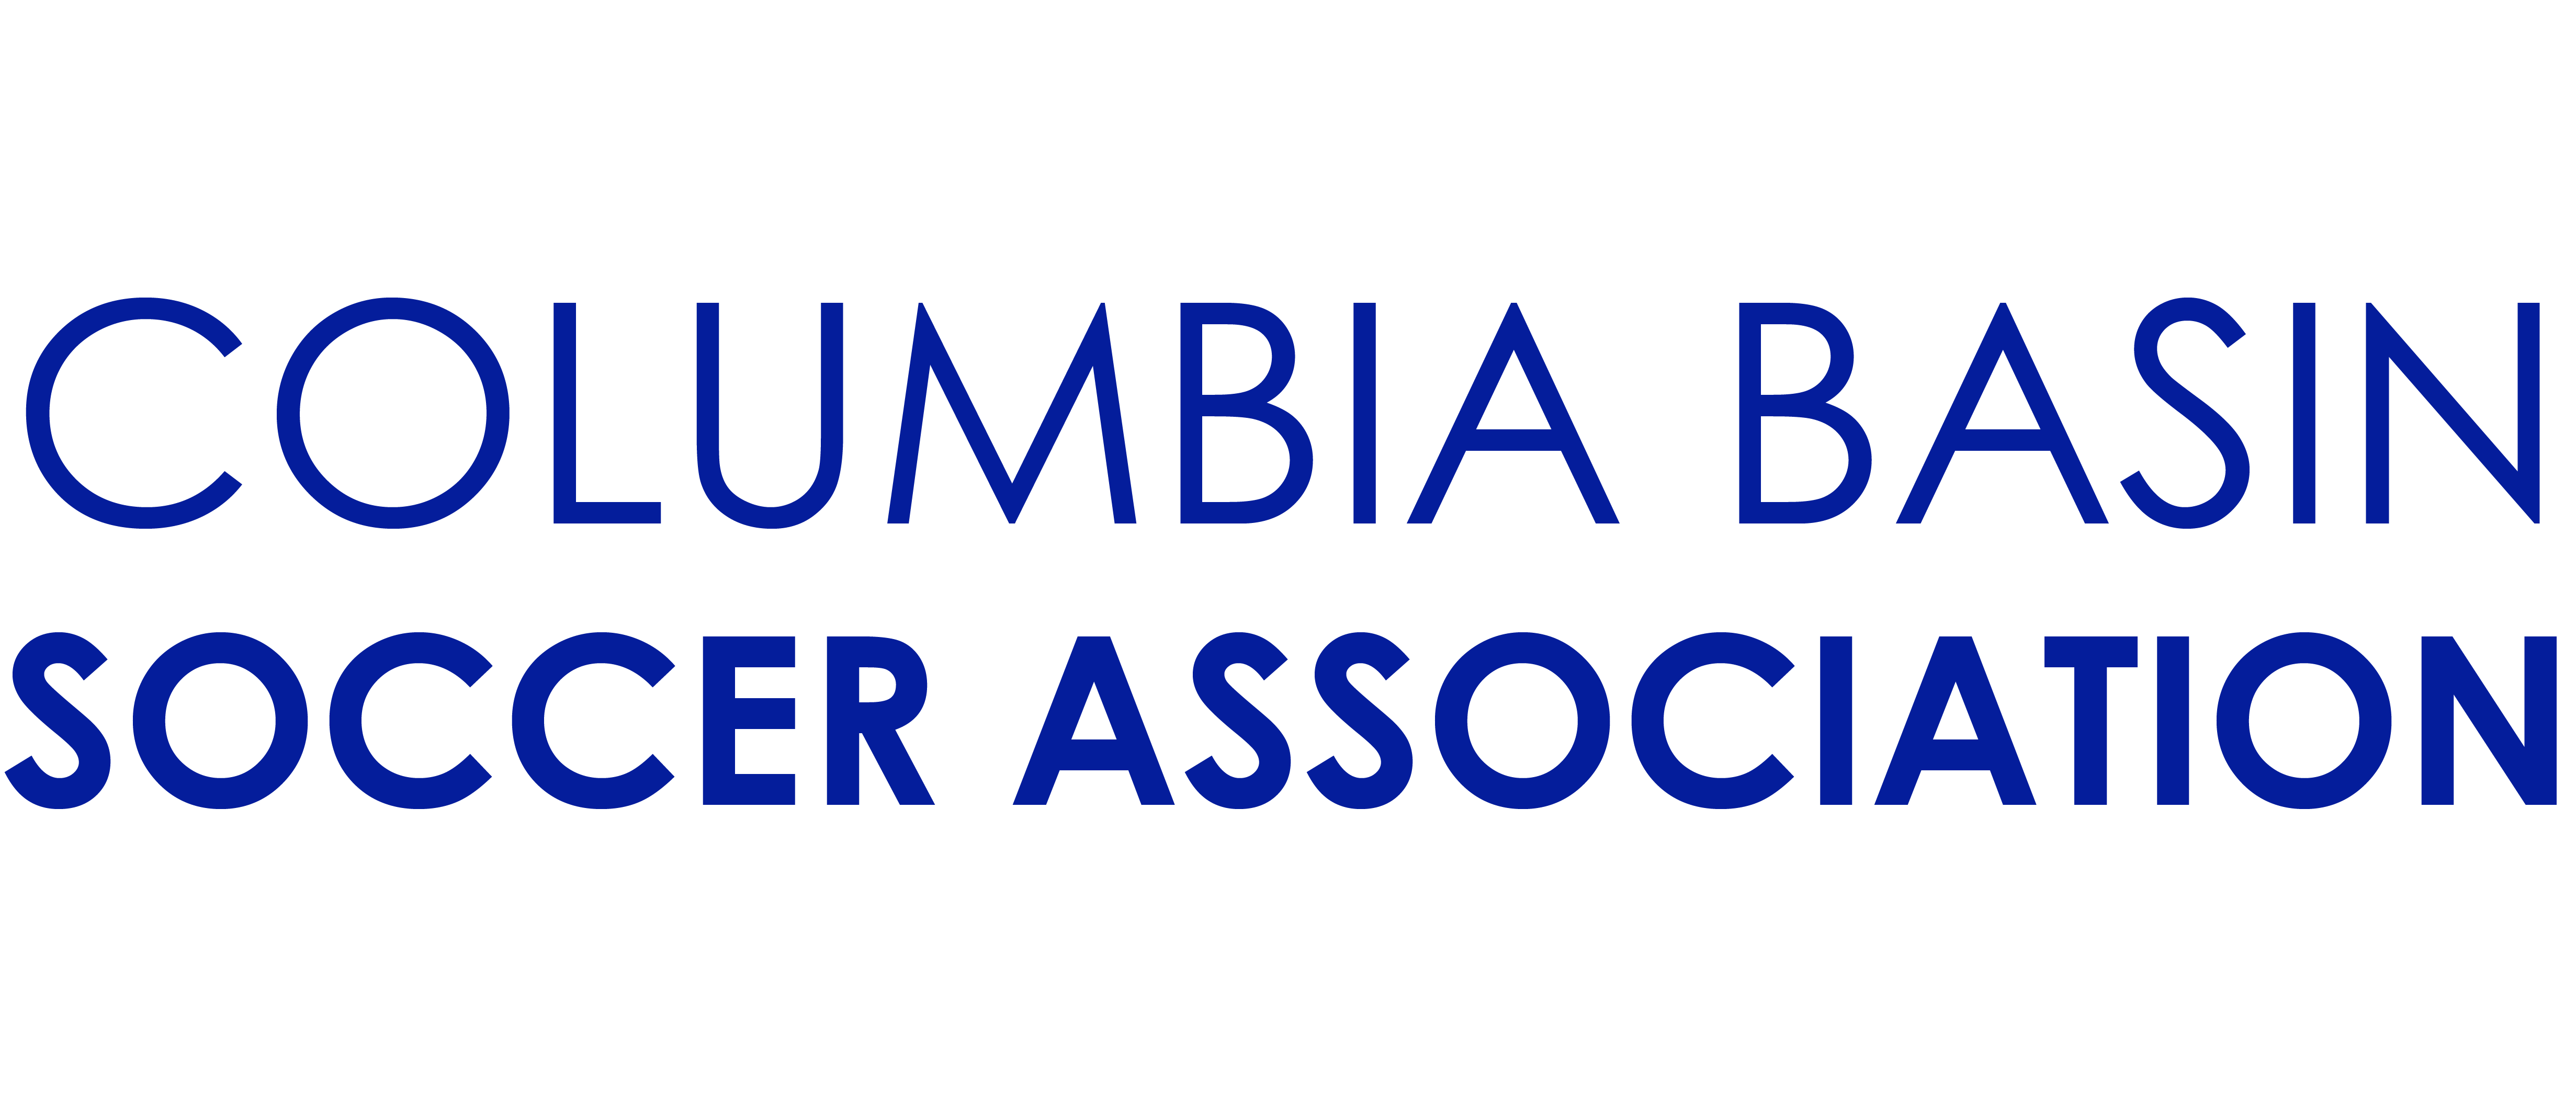 Columbia Basin Soccer Association